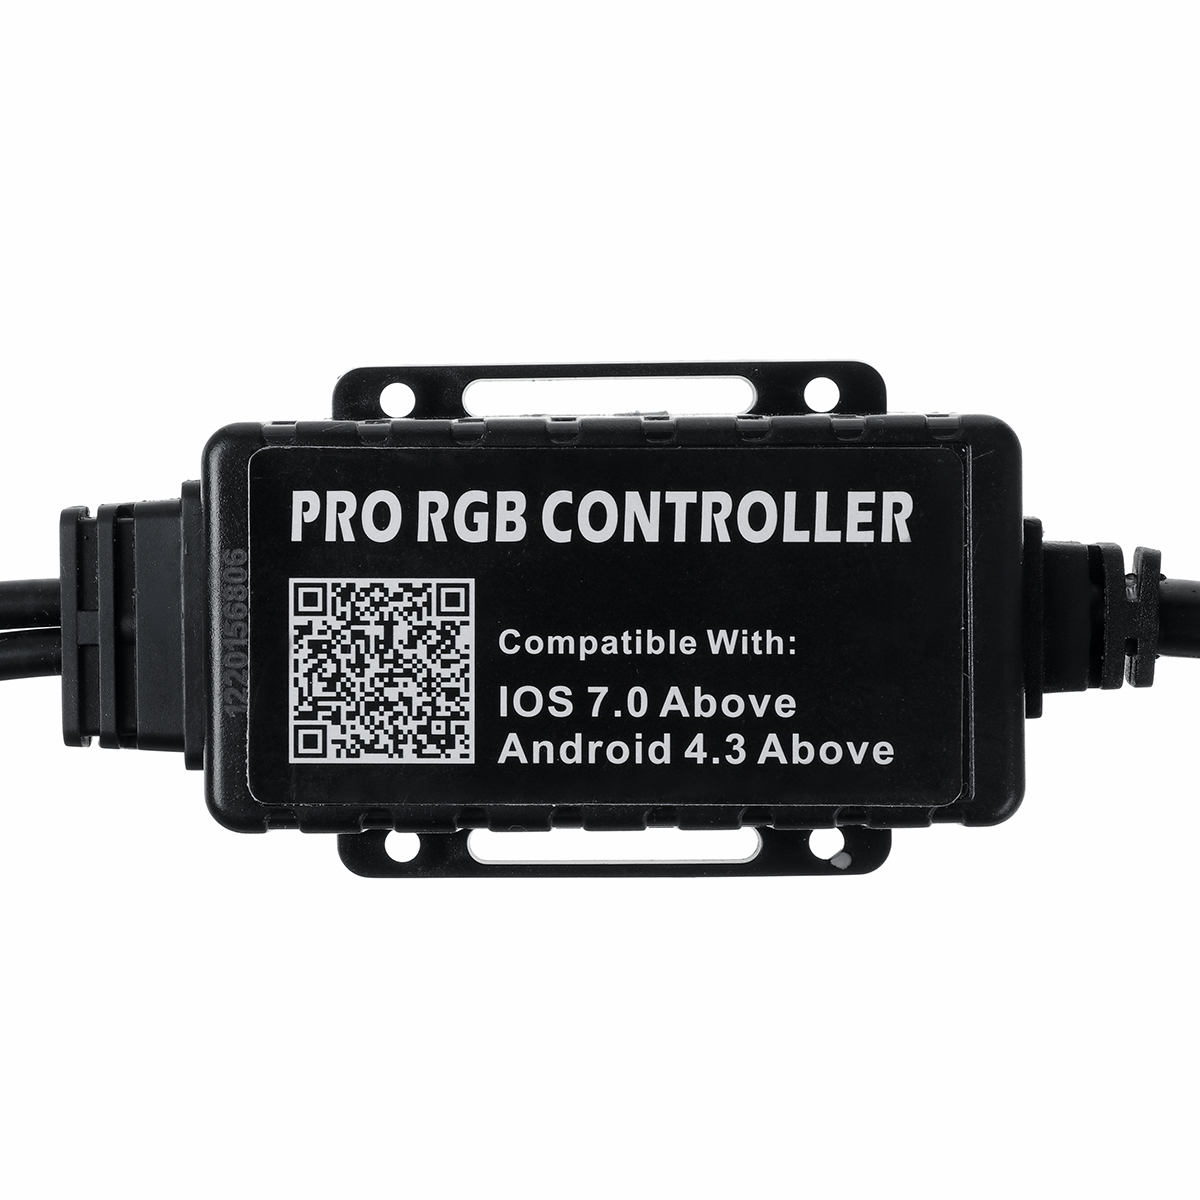 4IN1 15.5'' Car RGB LED Wheel Ring Rim Strip Lights Bluetooth APP Dual Control